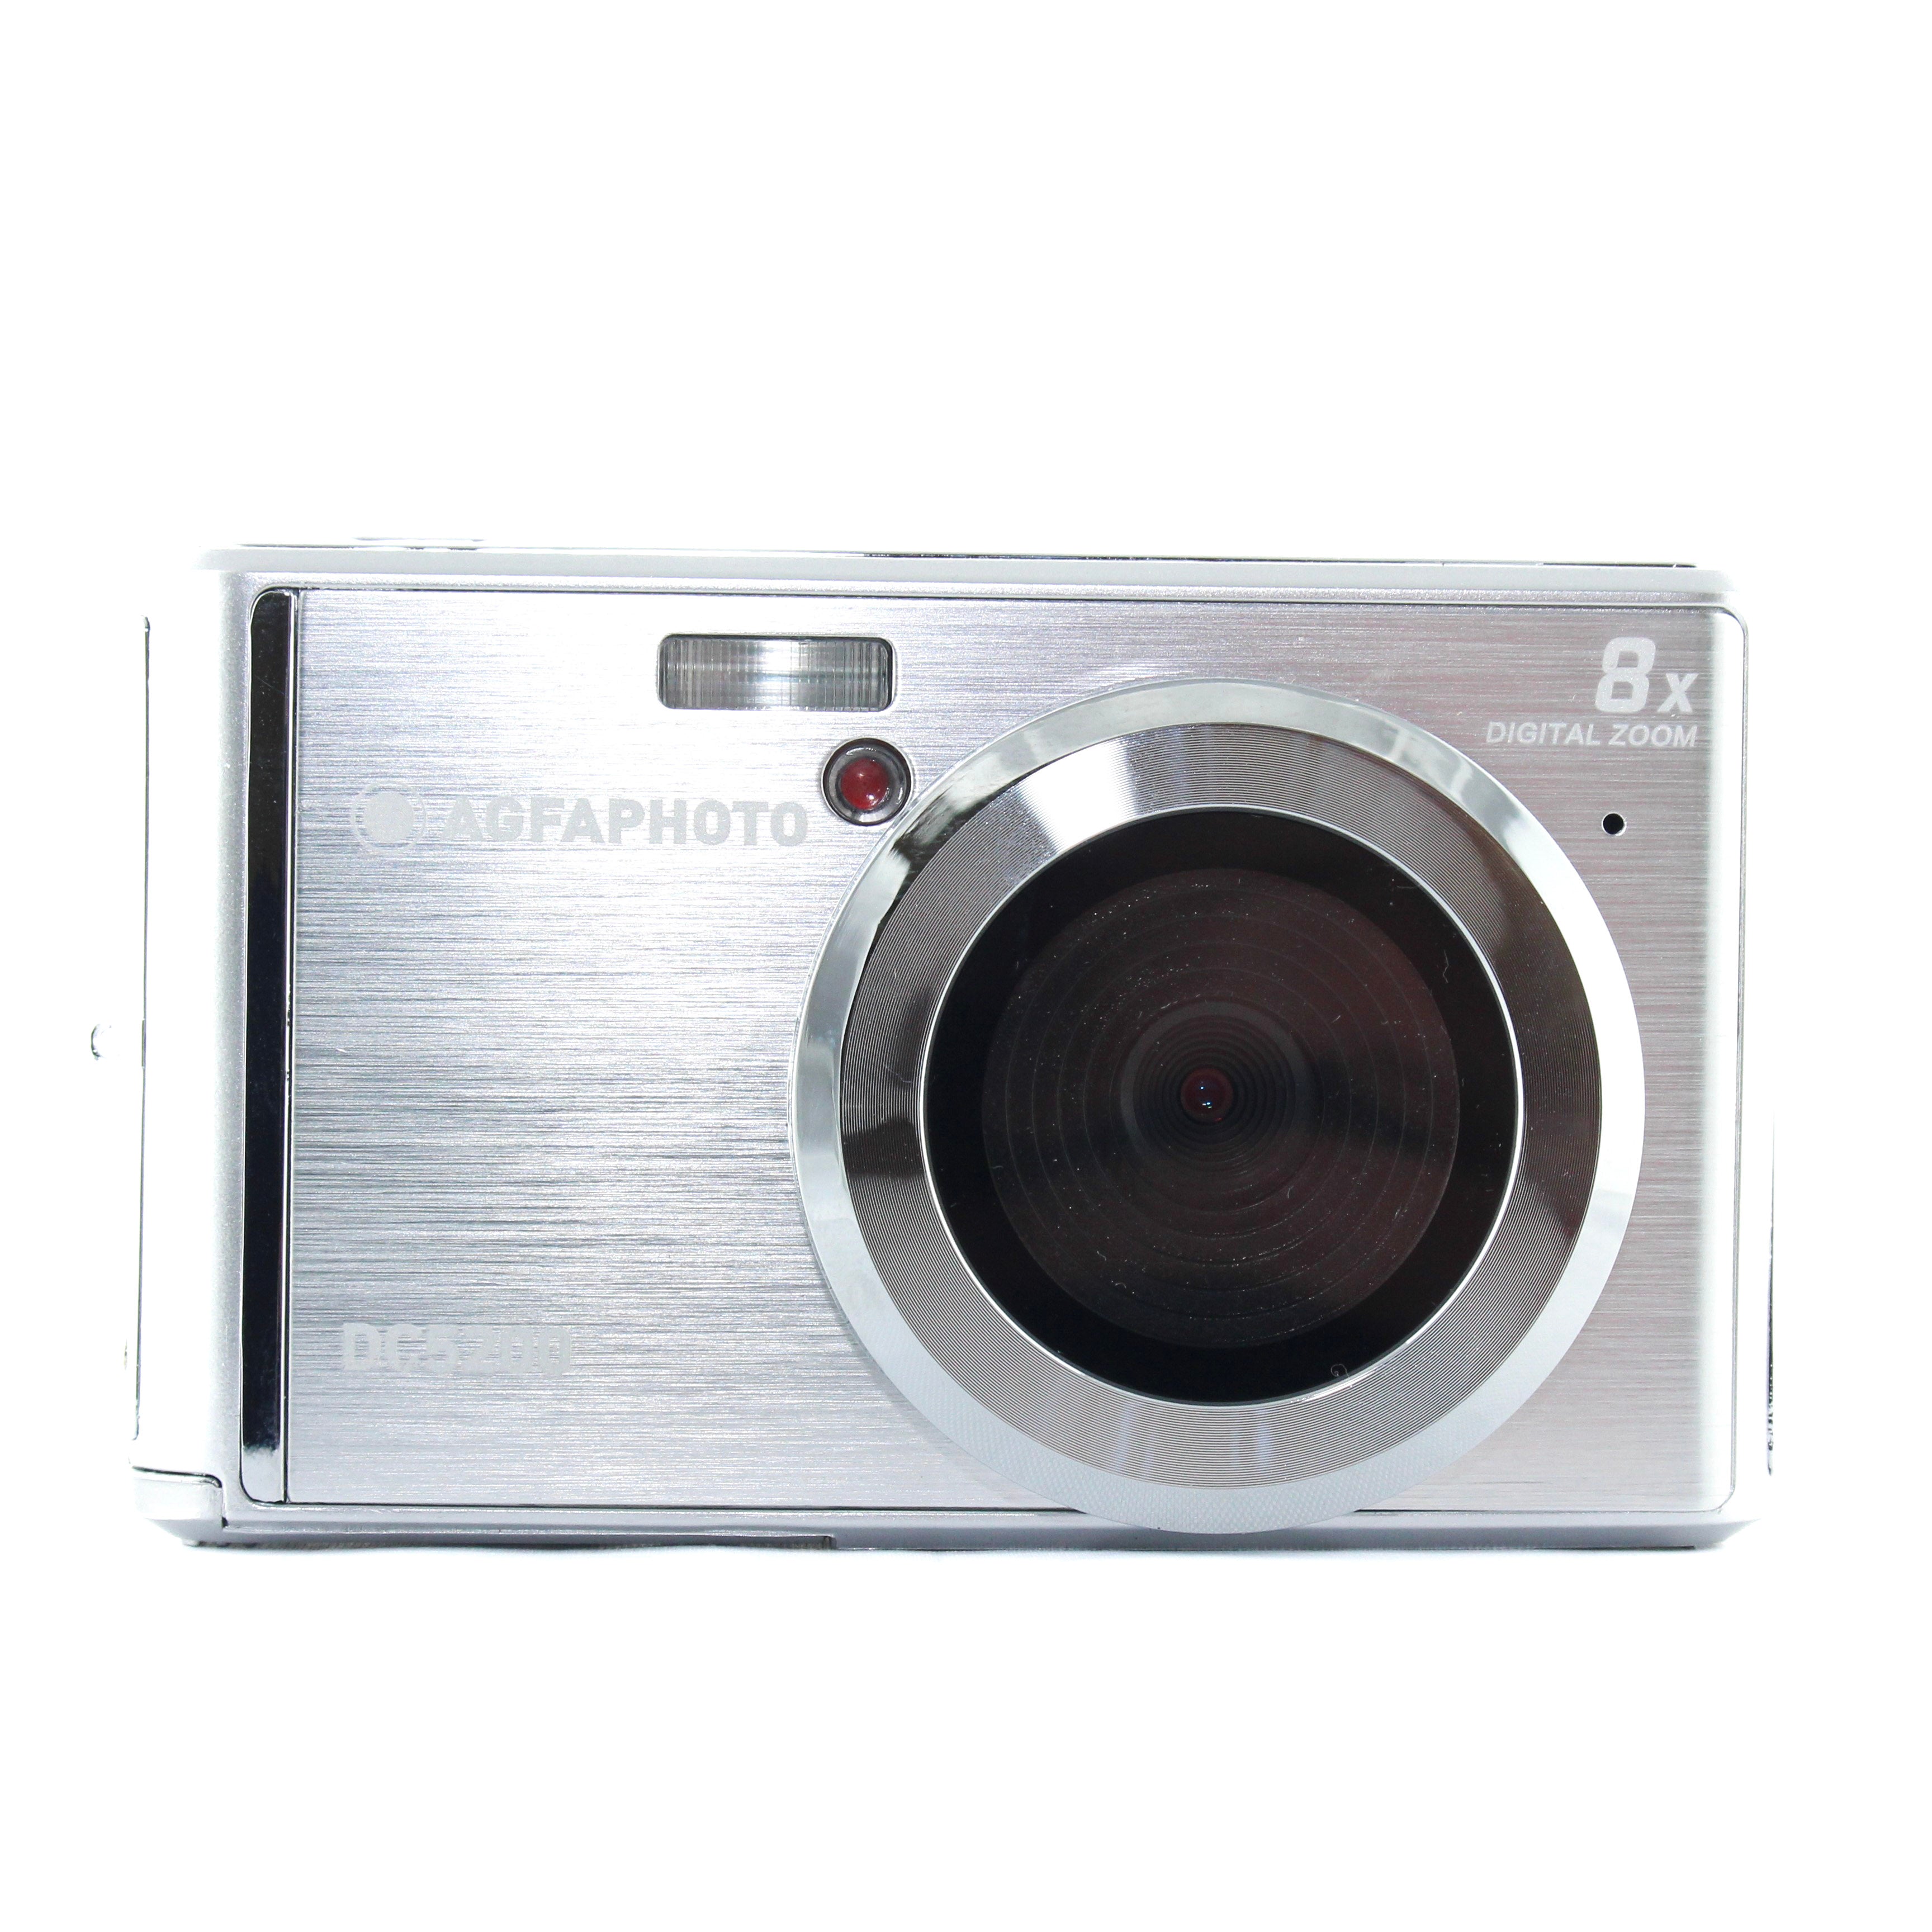 Agfa Realishot DC5200 Digital Compact Camera Kit